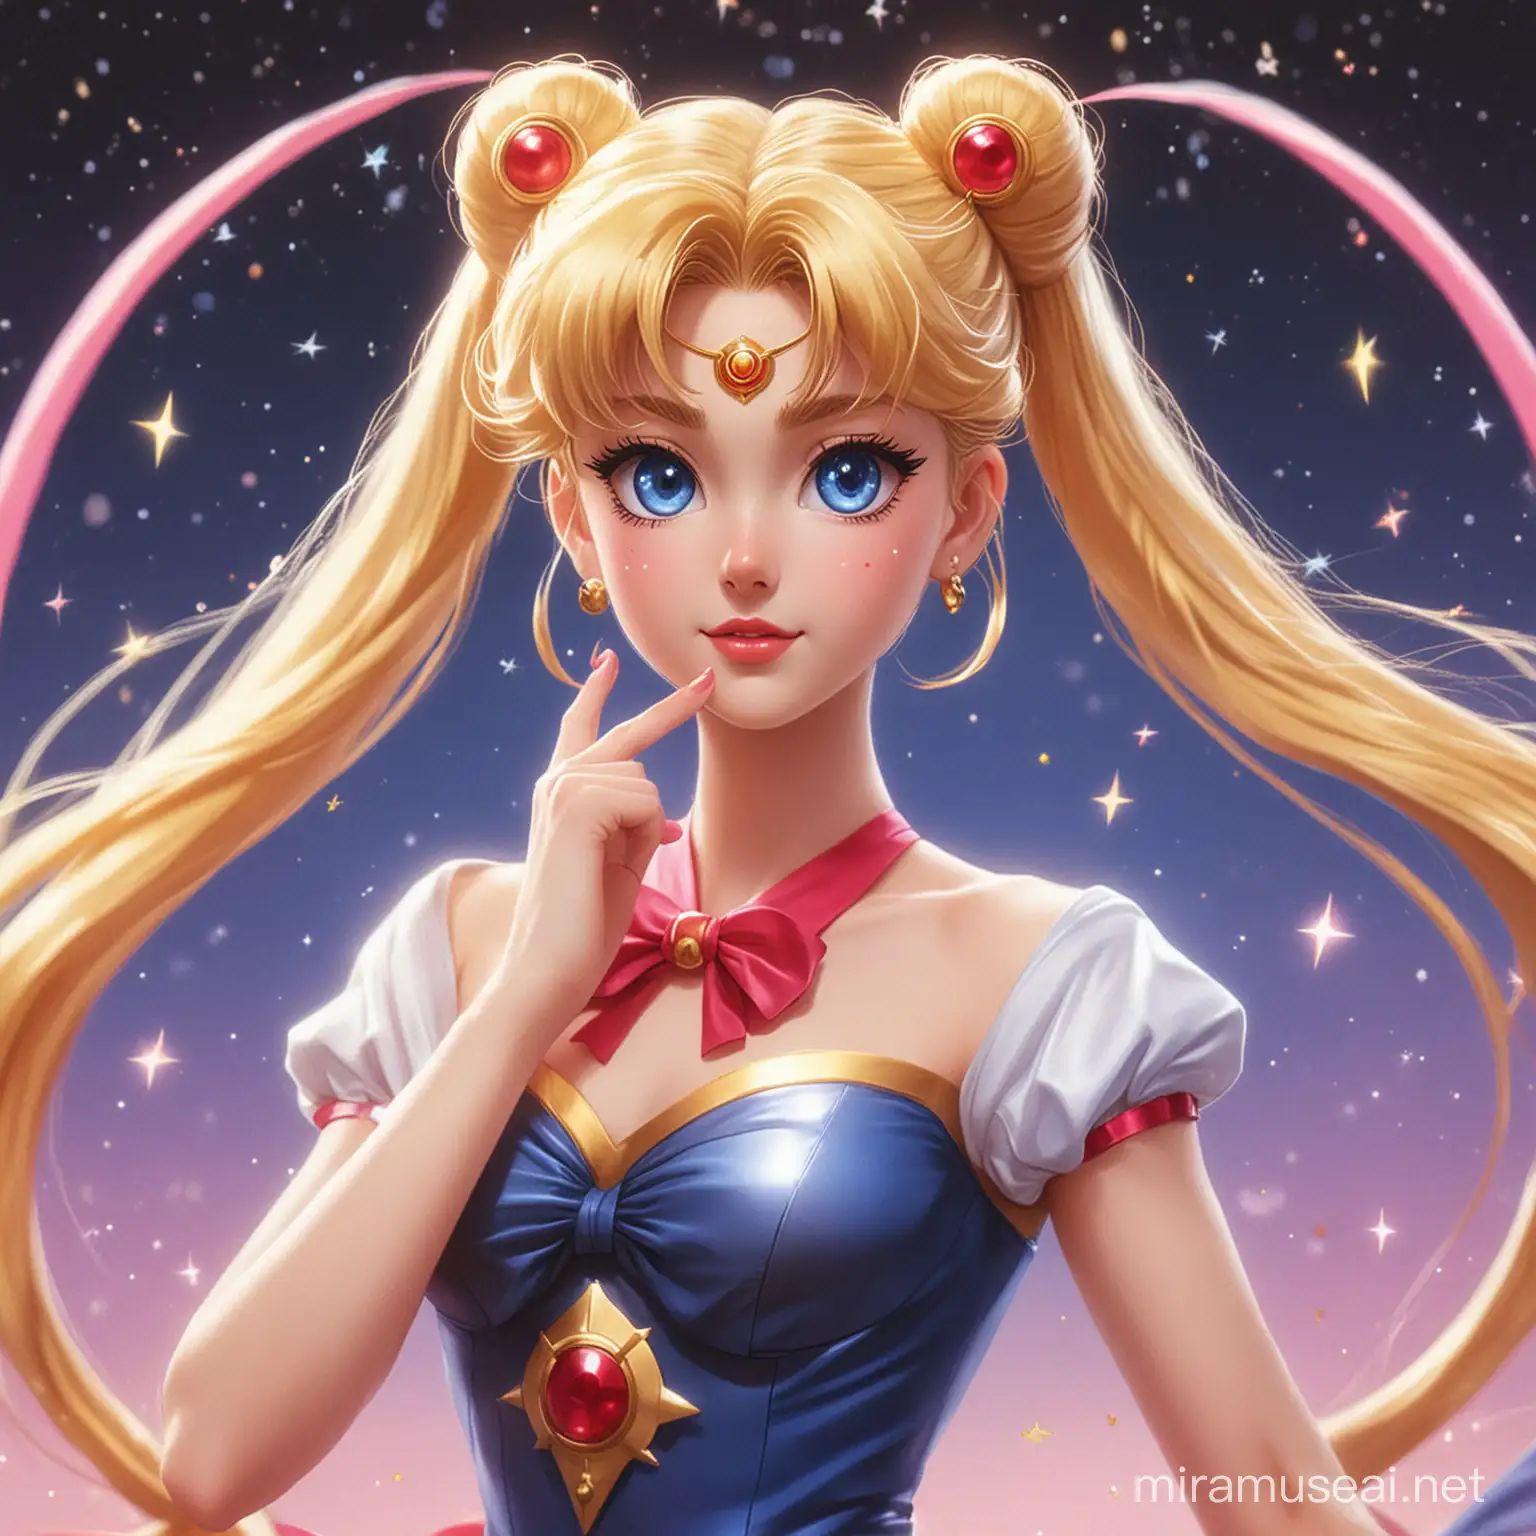 Magical Sailor Moon Transformation Scene